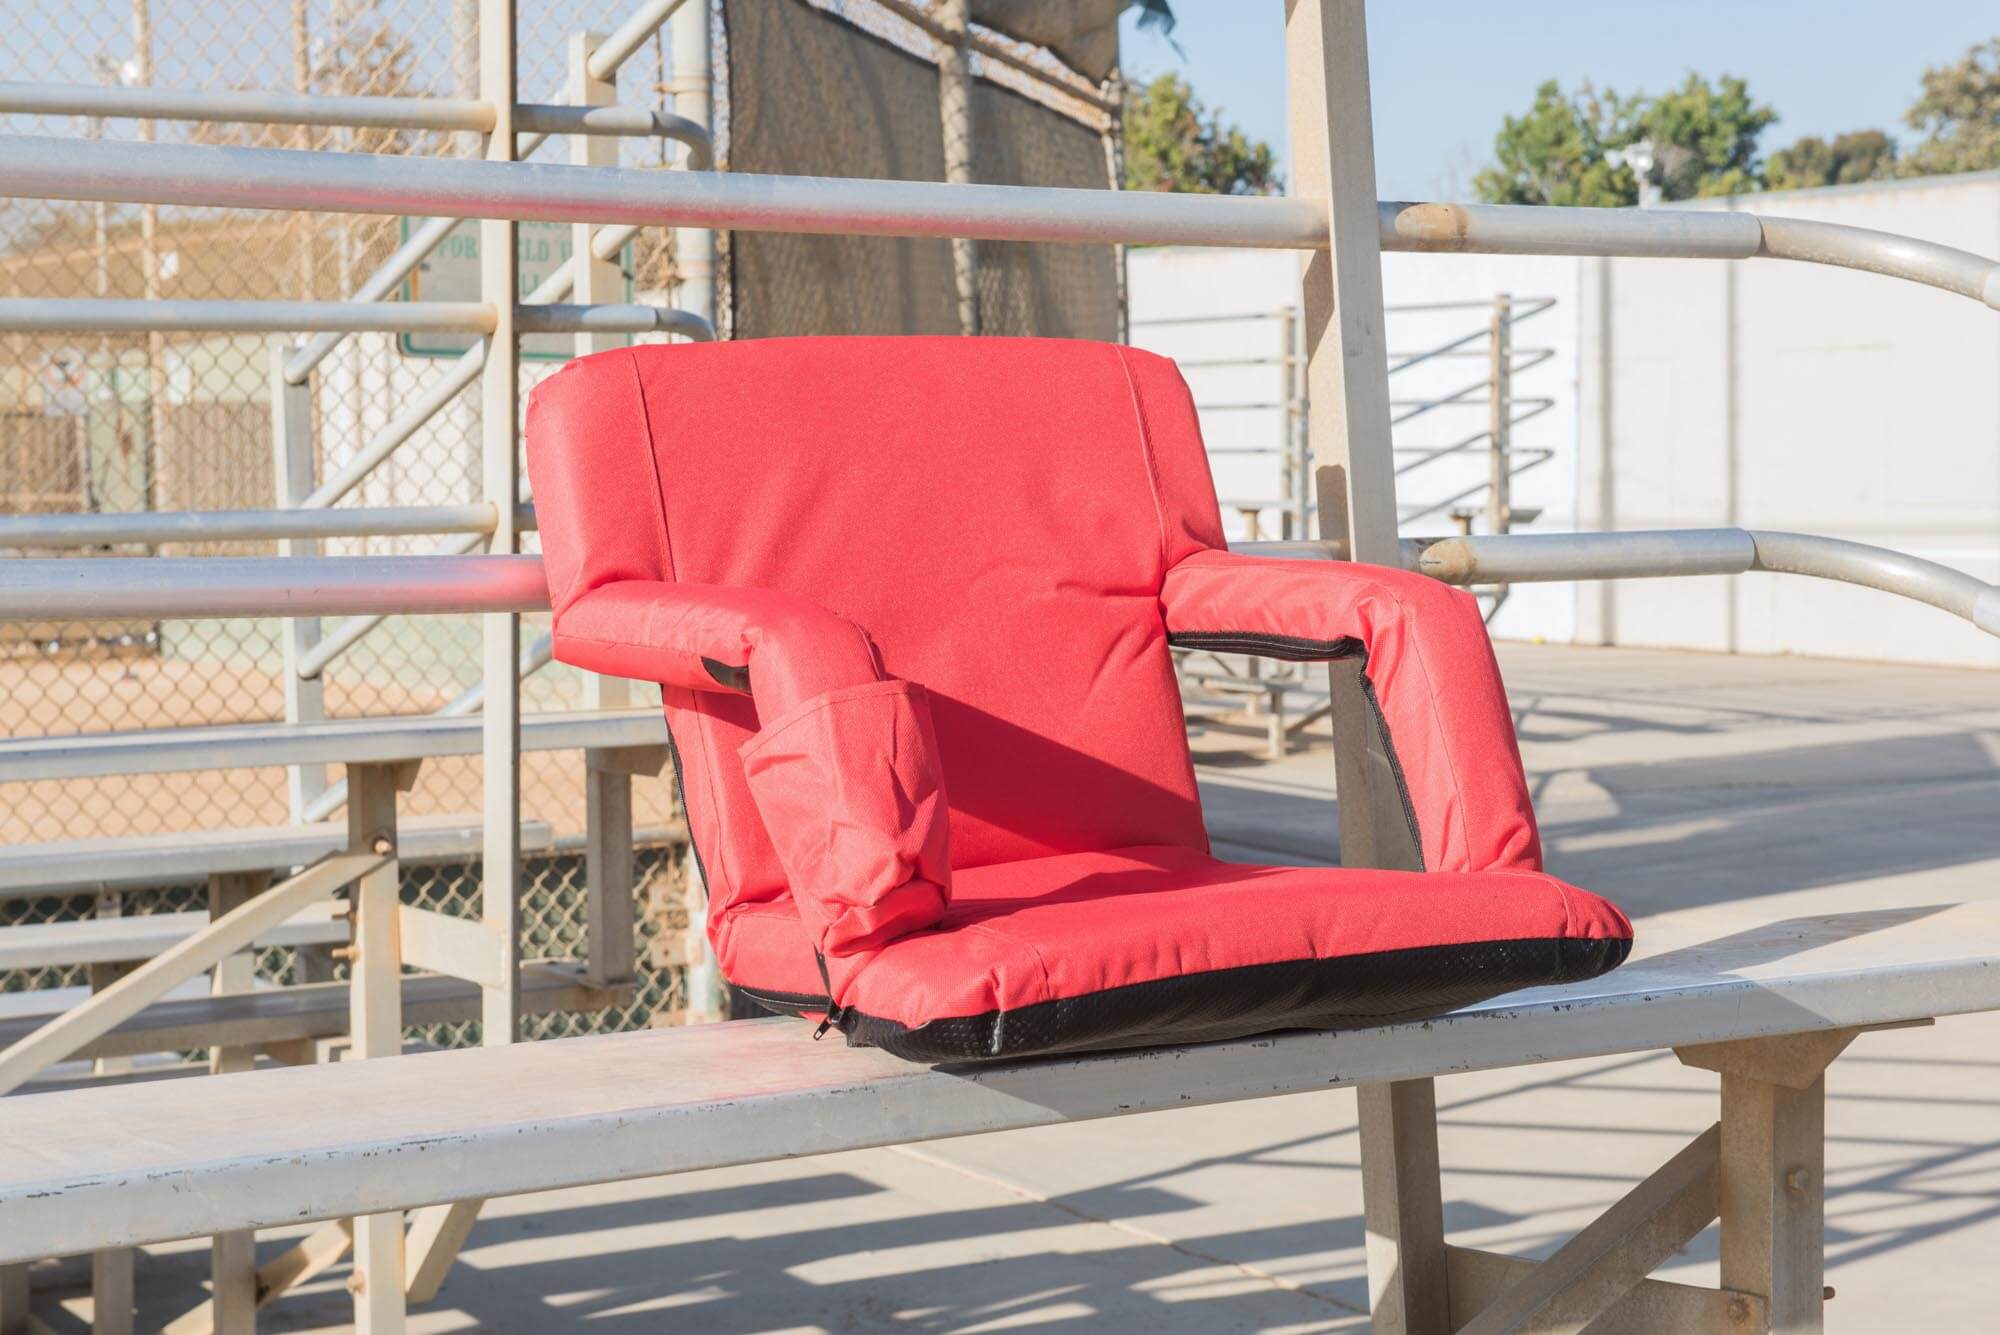 Portable Stadium Seat Folding Cushion Bleachers Chair Adjustable Red 